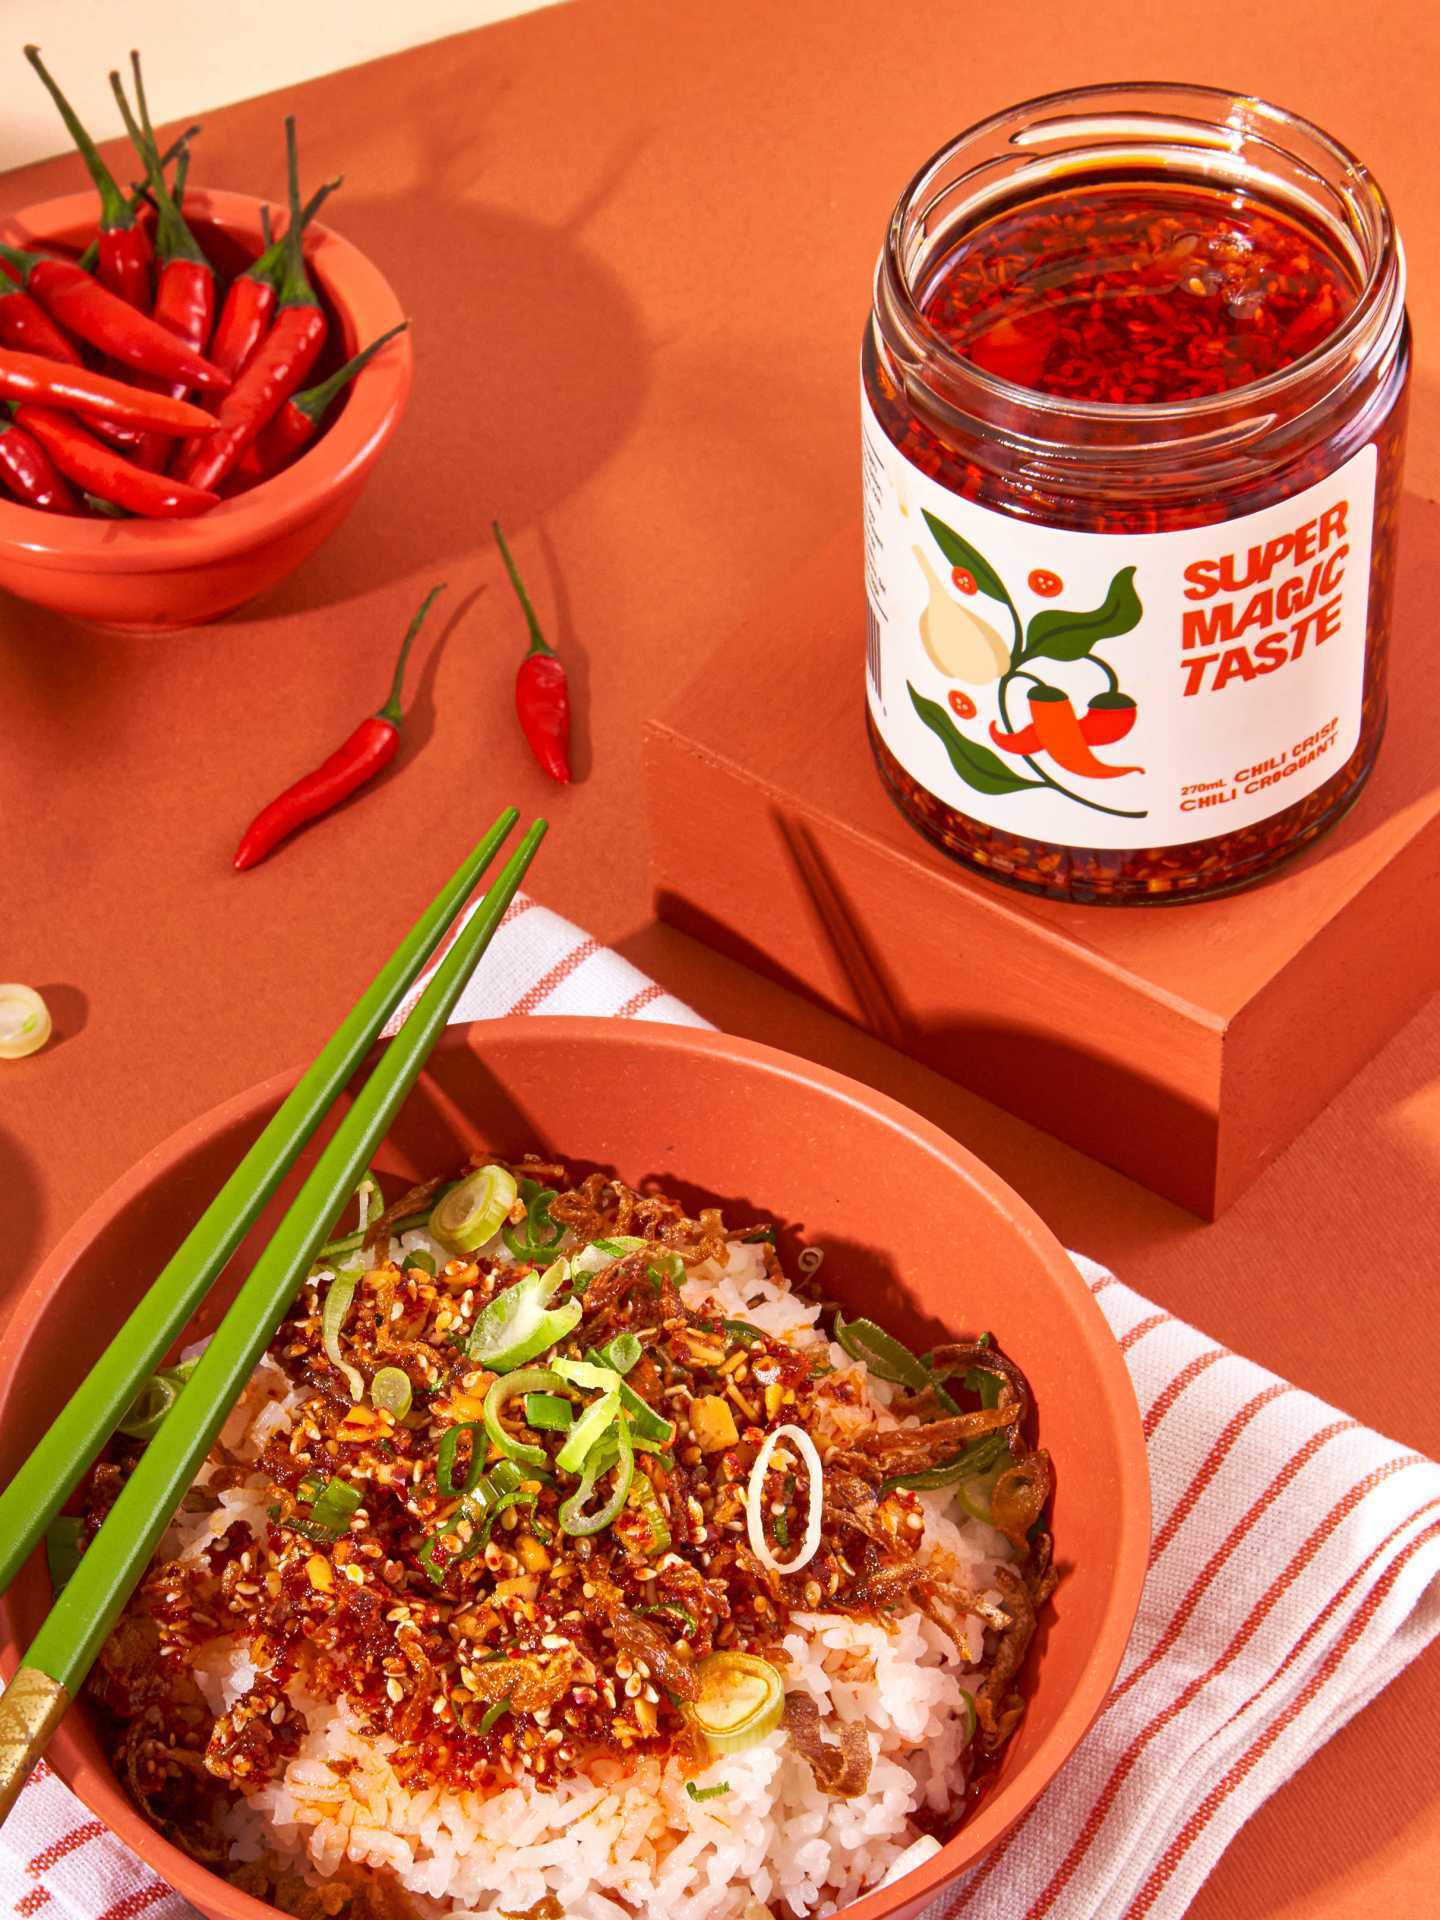 Mother's Day ideas | Super Magic Taste Chili Crisp on rice